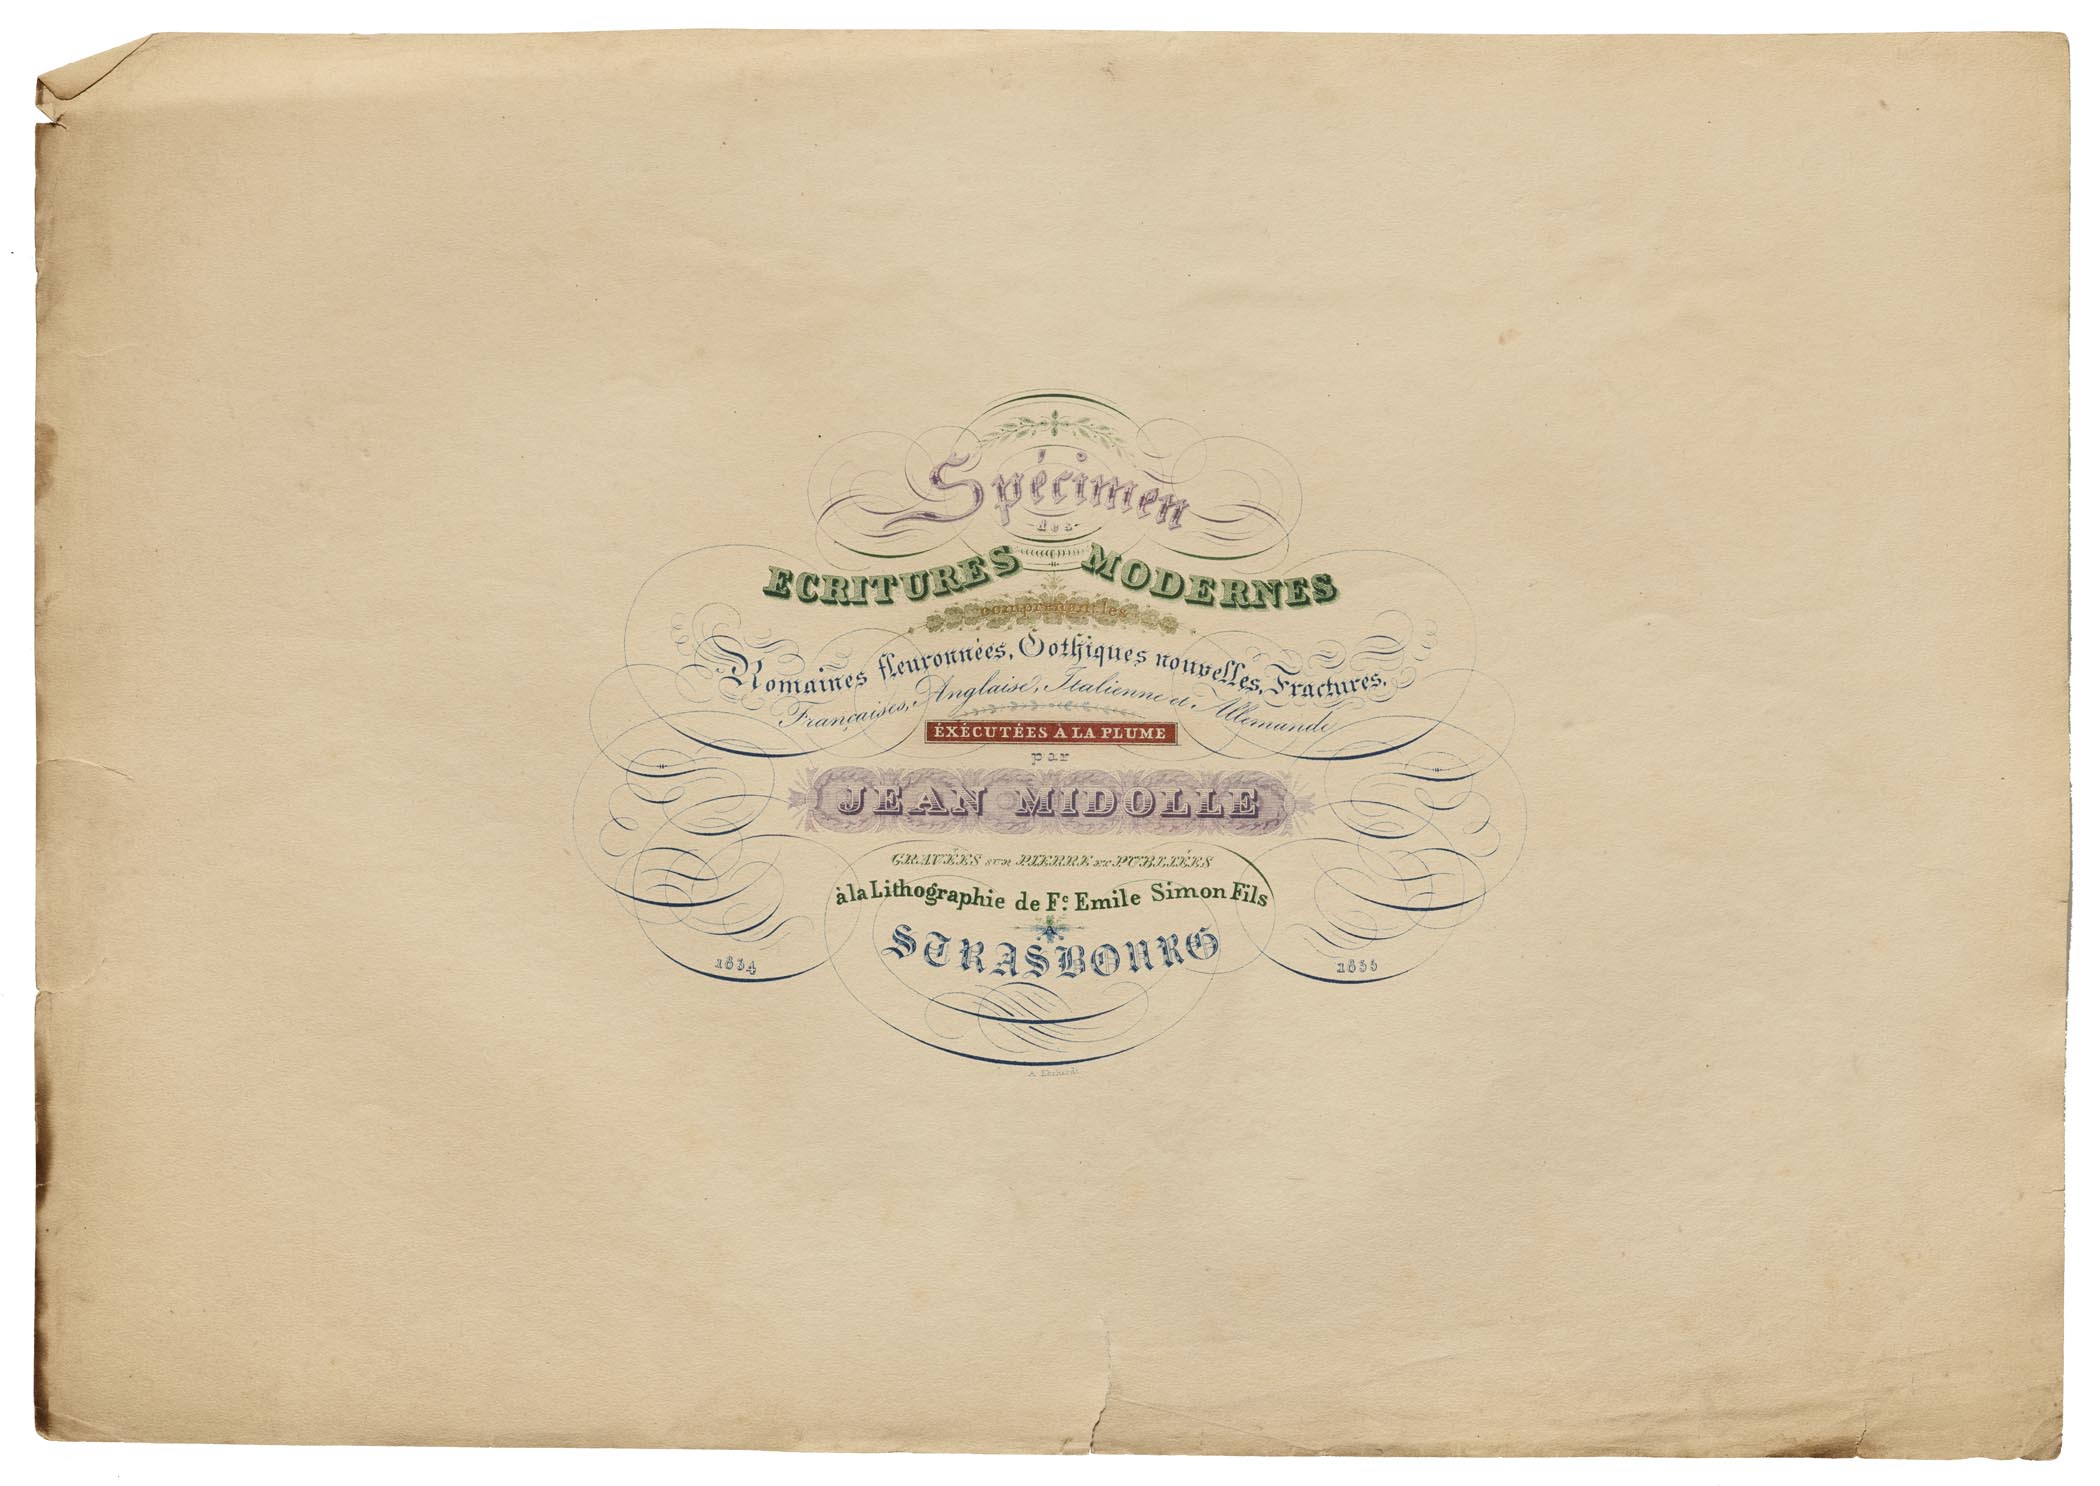 Jean Midolle, Title Page, Emile Simon fils press, France, 1835.